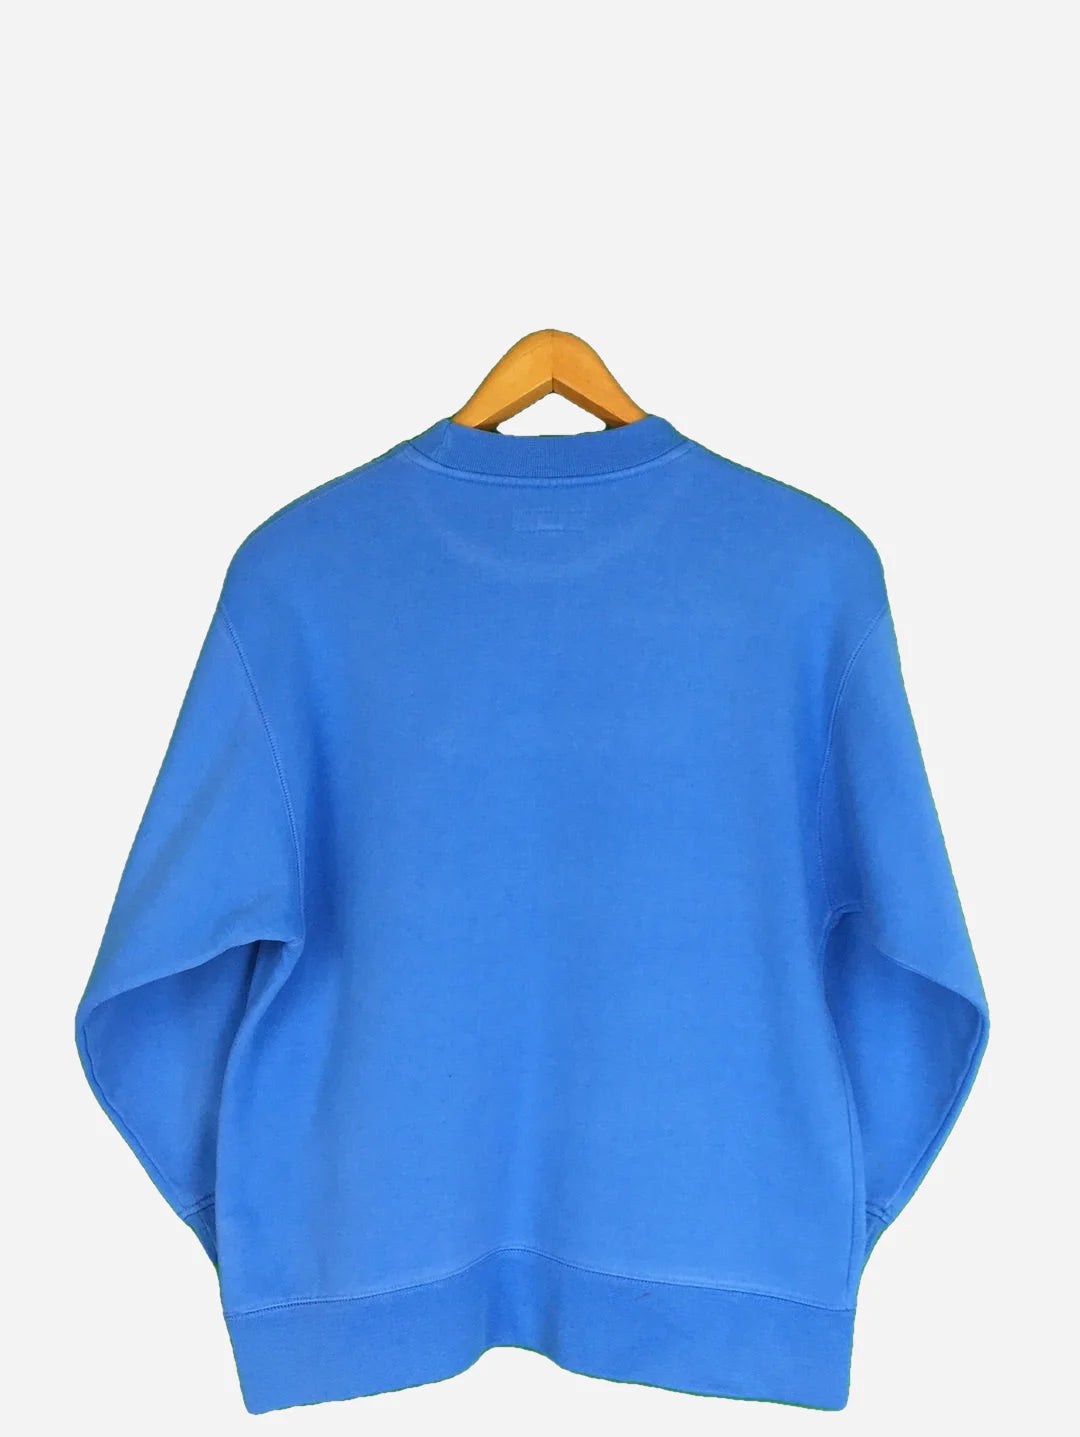 Reebok Sweater (S)